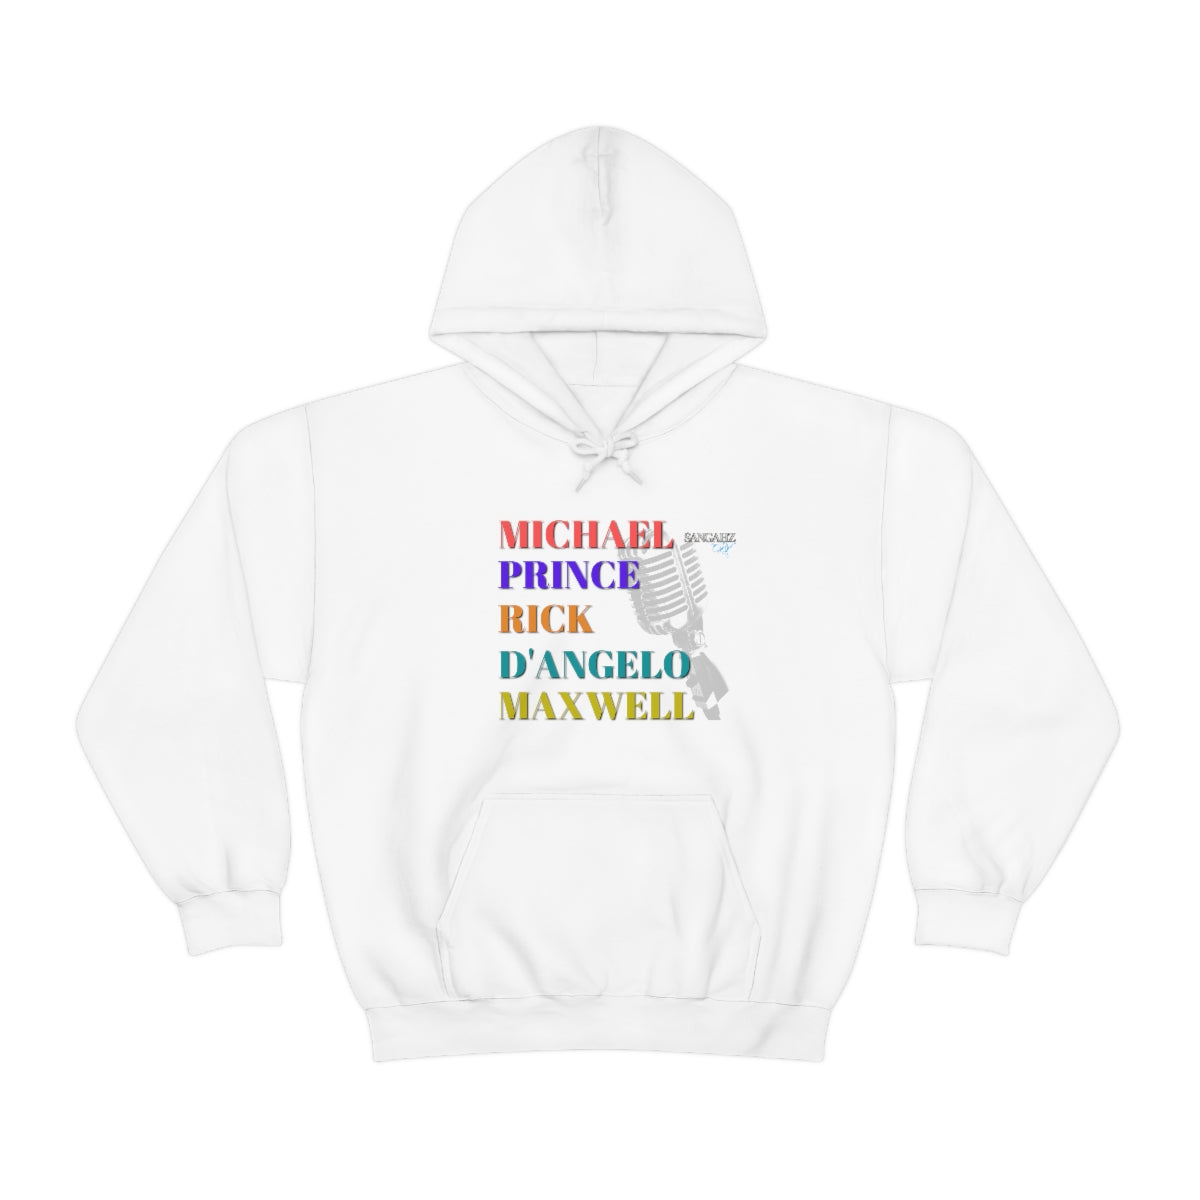 TREND SETTERS SANGAHZ™ Hooded Sweatshirt